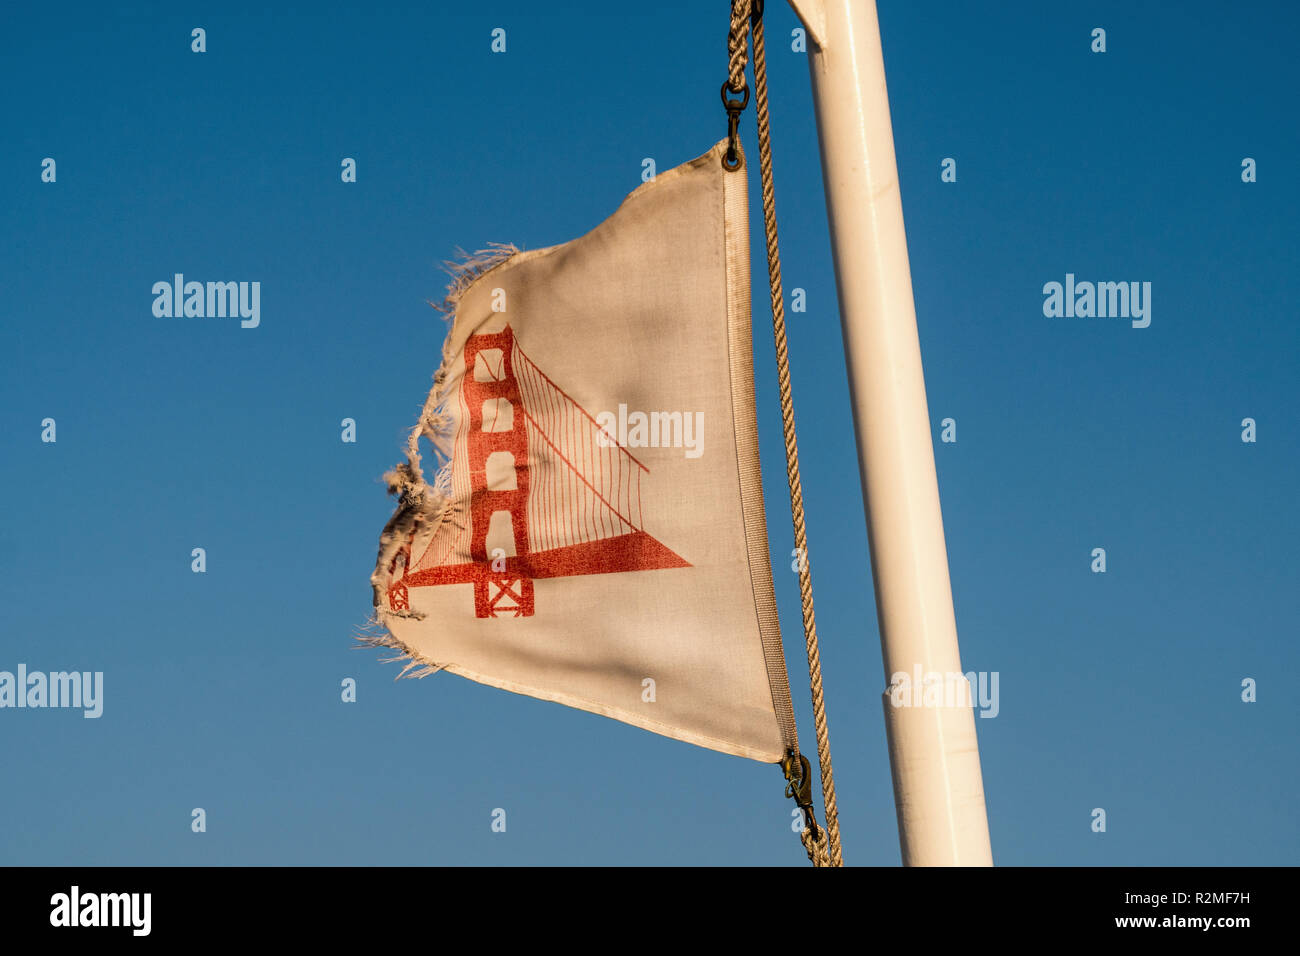 San Francisco, ferry, flag with SF logo Stock Photo